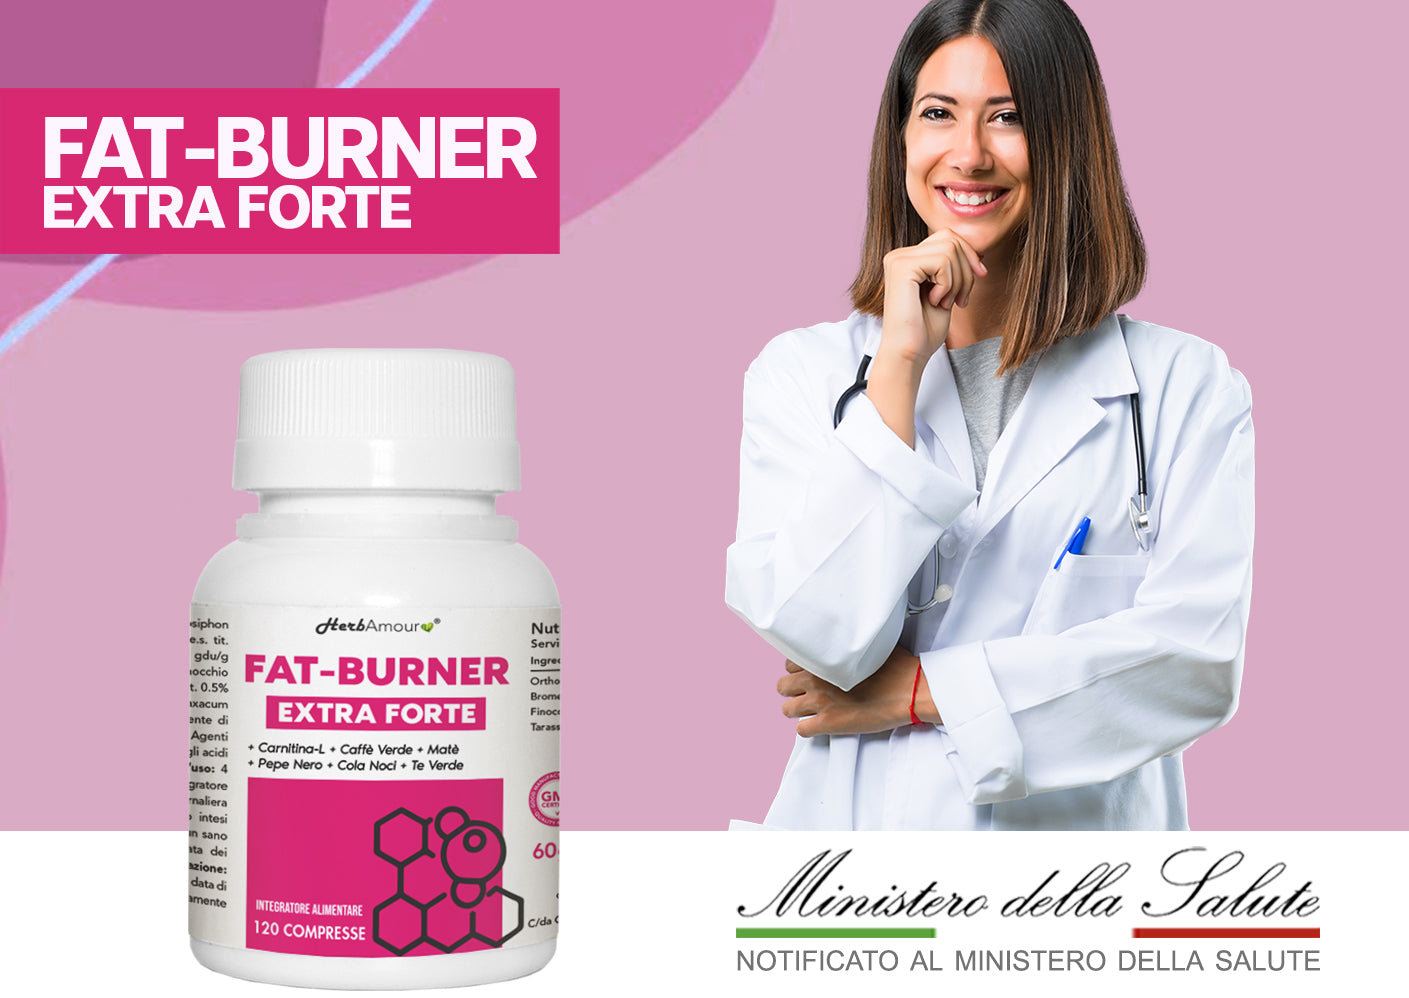 HerbAmour® Fat-Burner